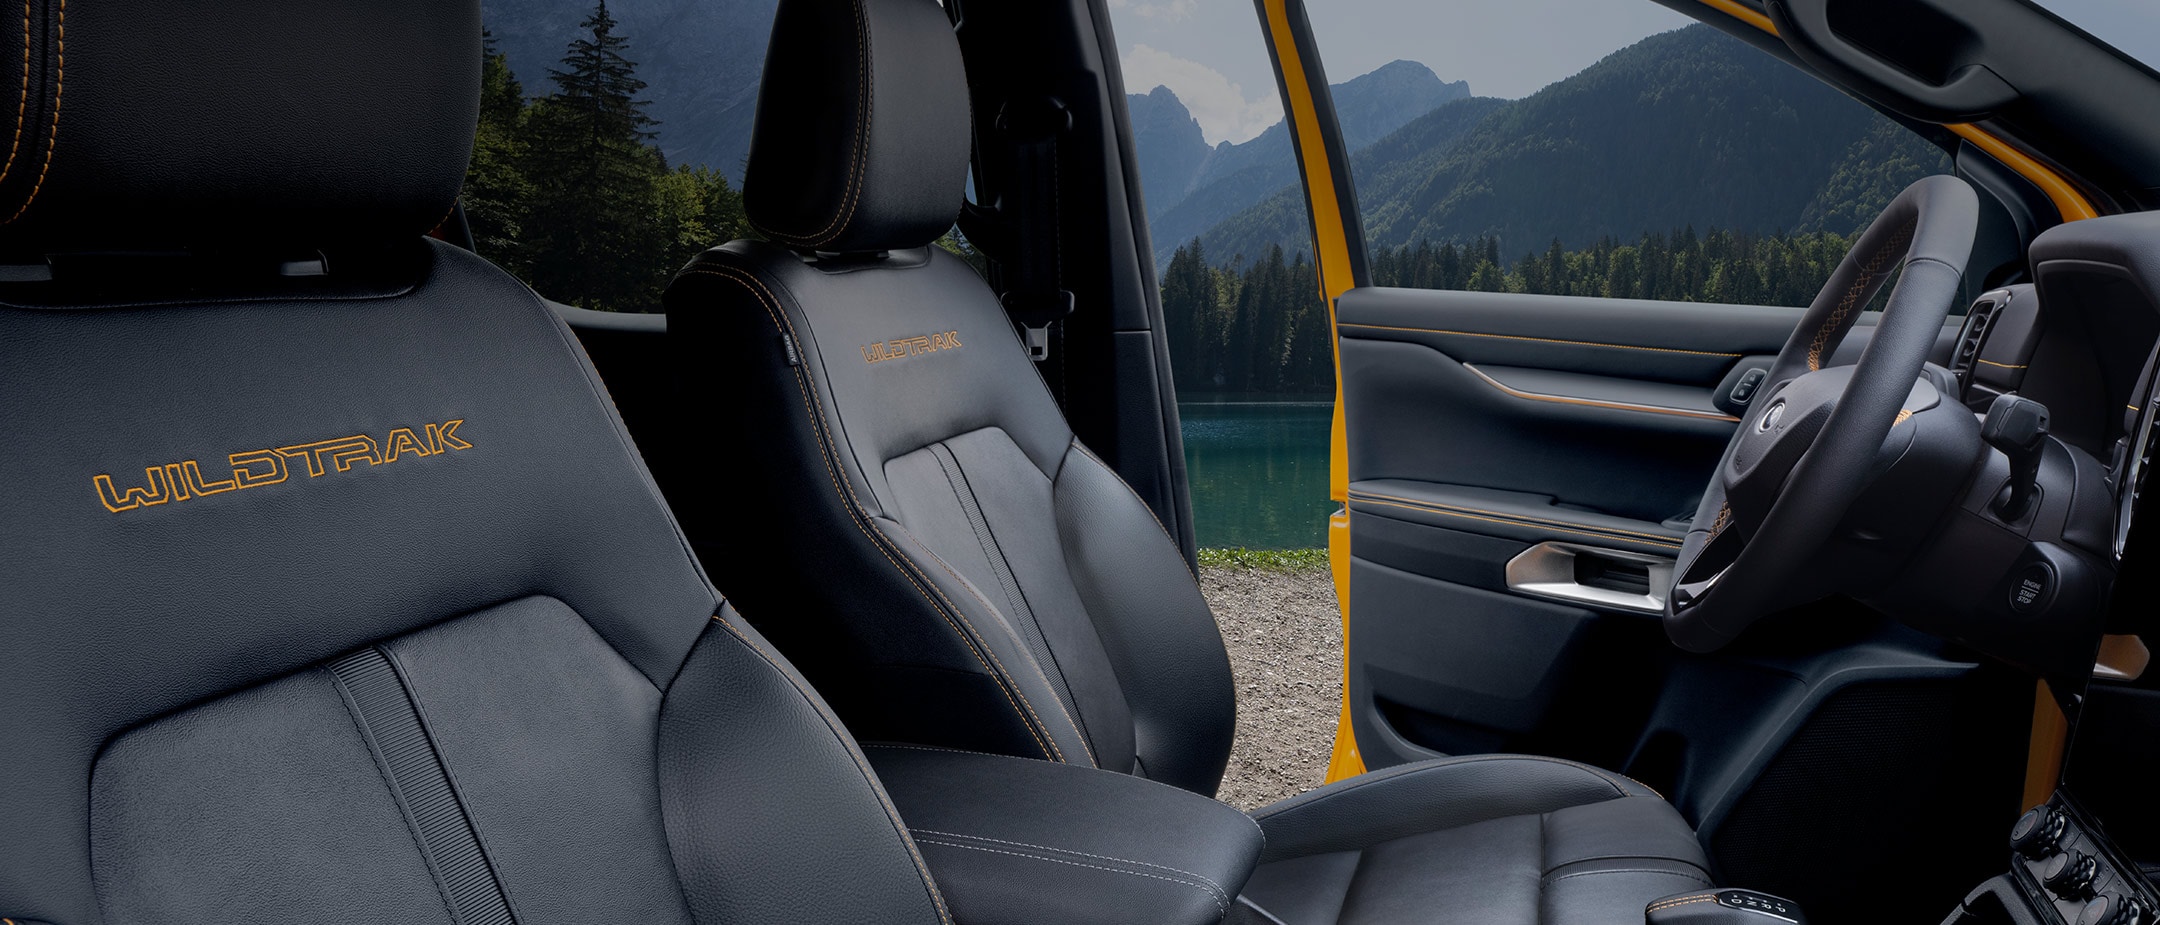 All-New Ranger Wildtrak interior front seats